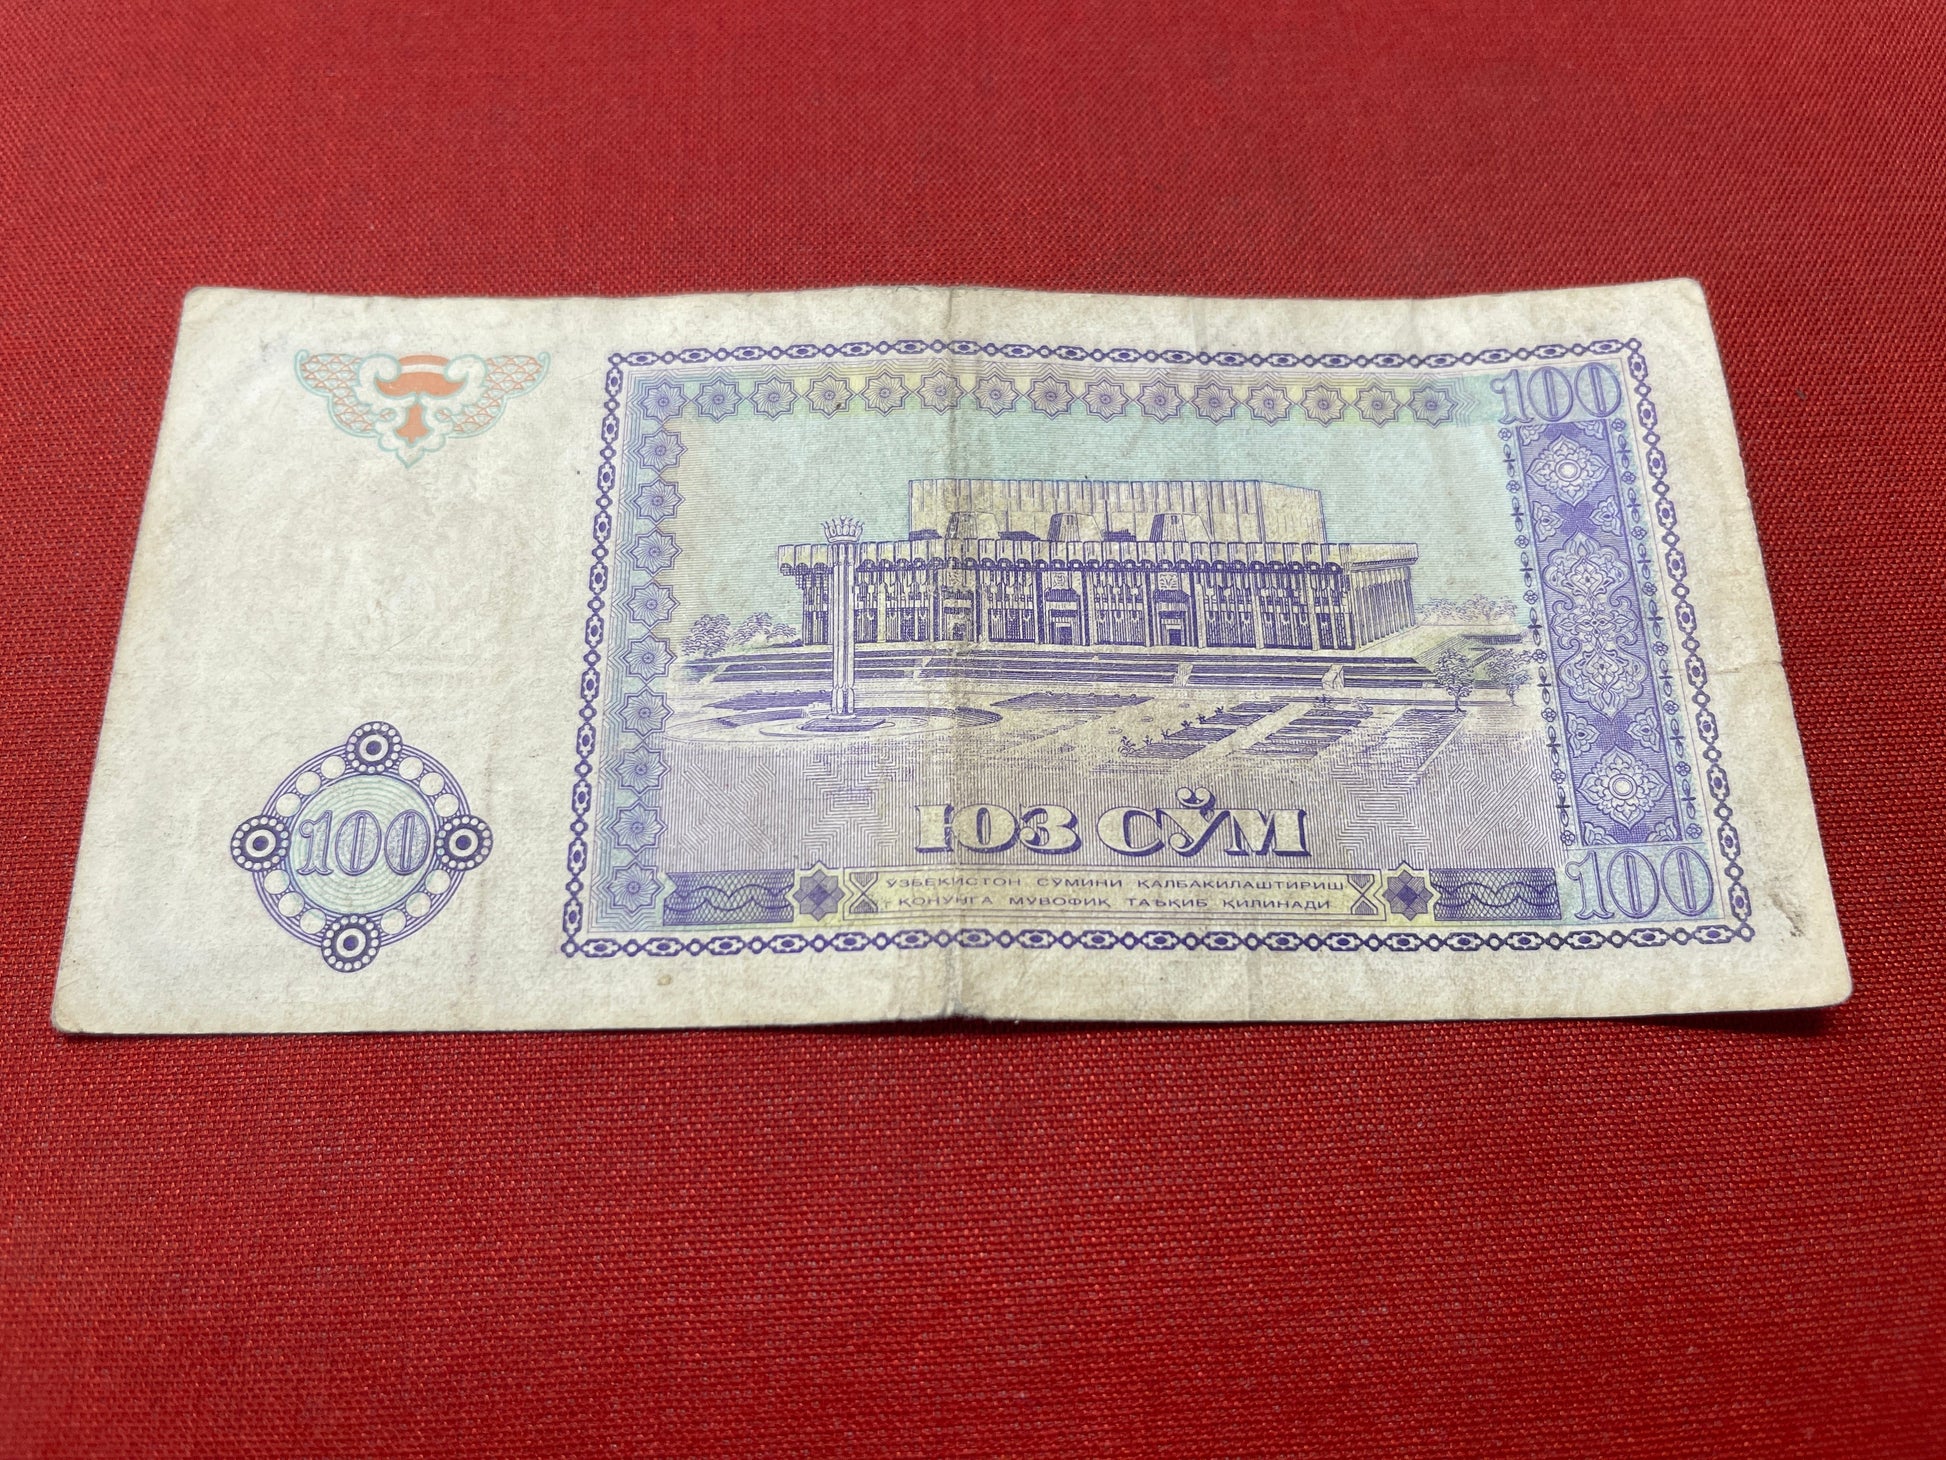 Central Bank of Uzbekistan 100 Soʻm Banknote